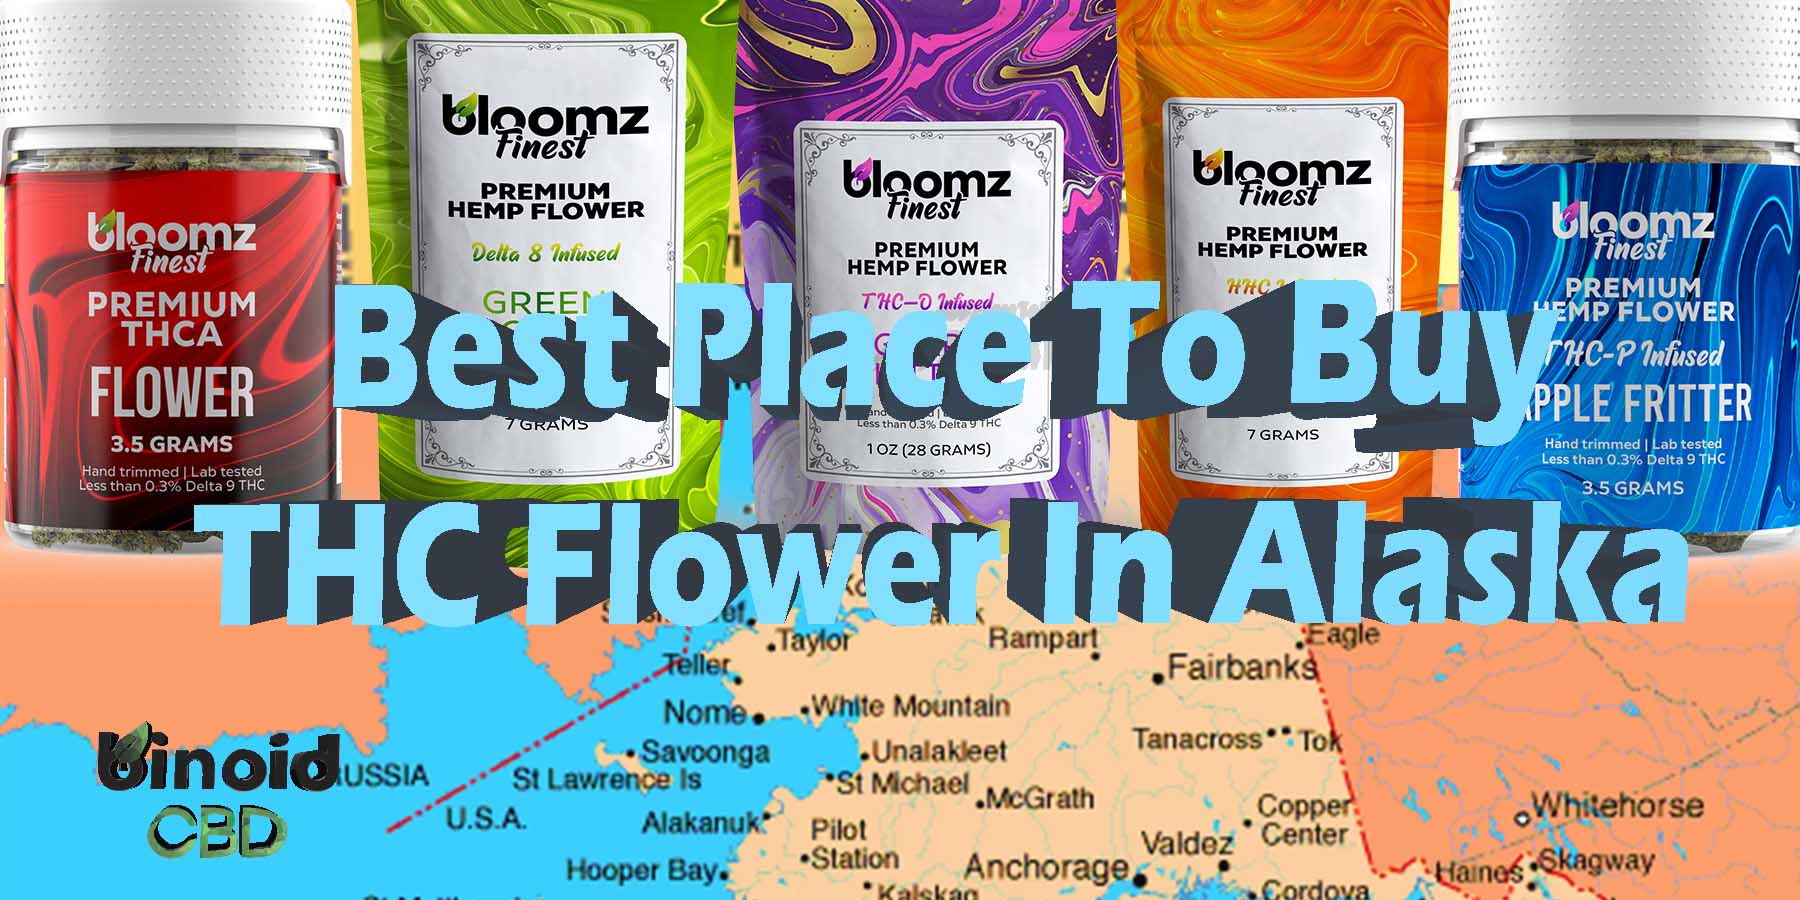 Buy THC Flower Alaska Joints PreRolls Get Online Near Me For Sale Best Brand Strongest Real Legal Store Shop Reddit